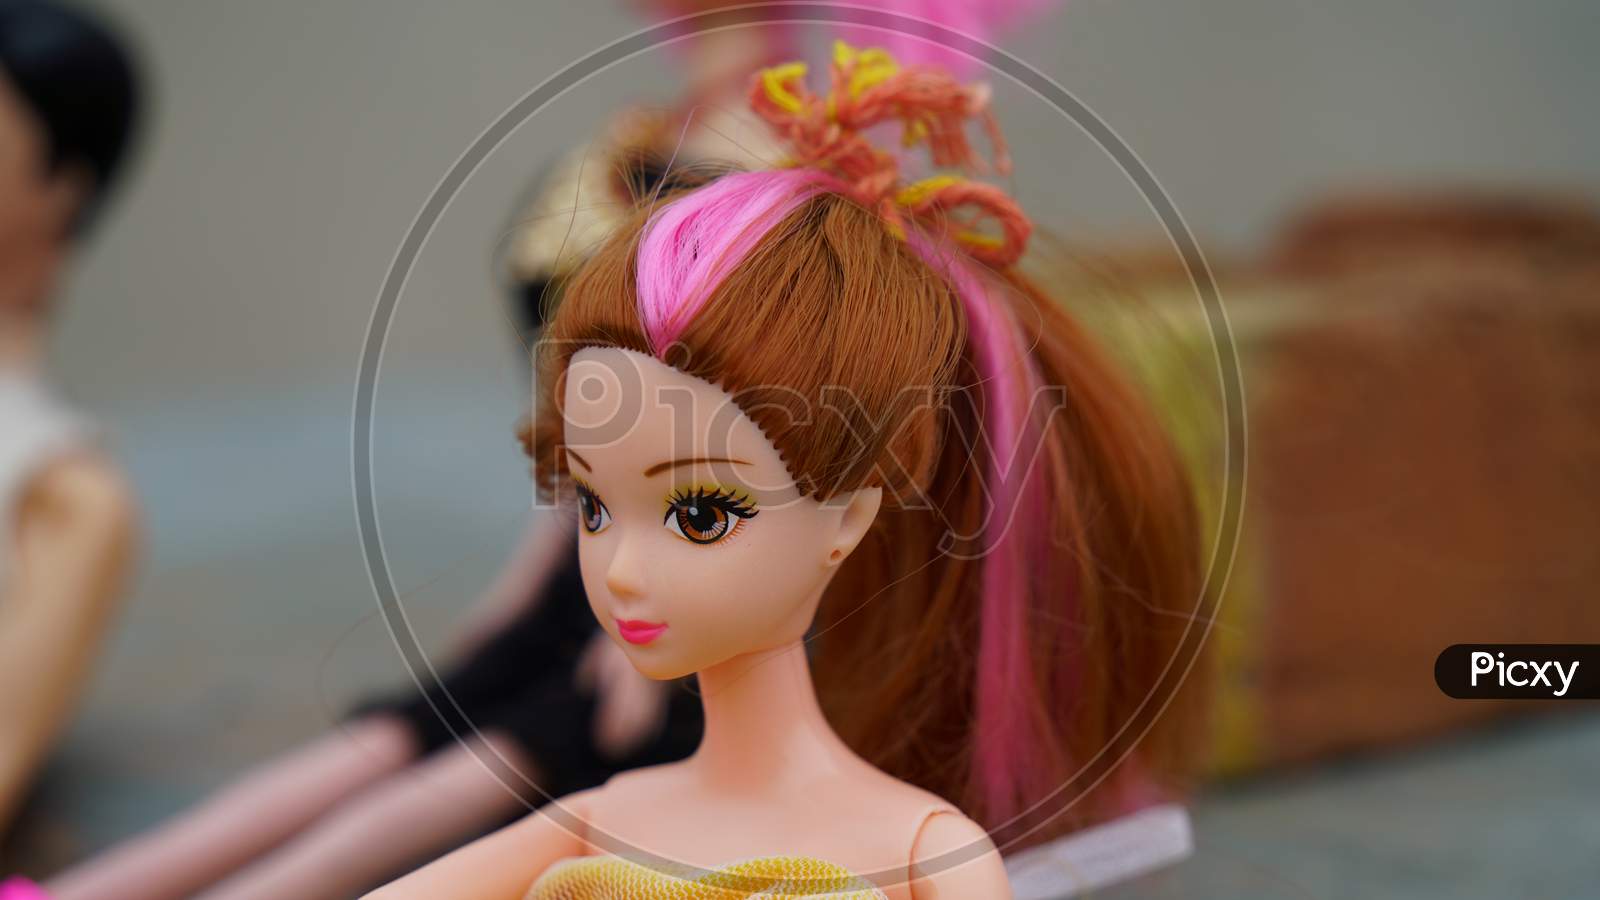 22 September 2020 : Reengus, Jaipur, India / Portrait Of Barbie Doll With Blond Hair.